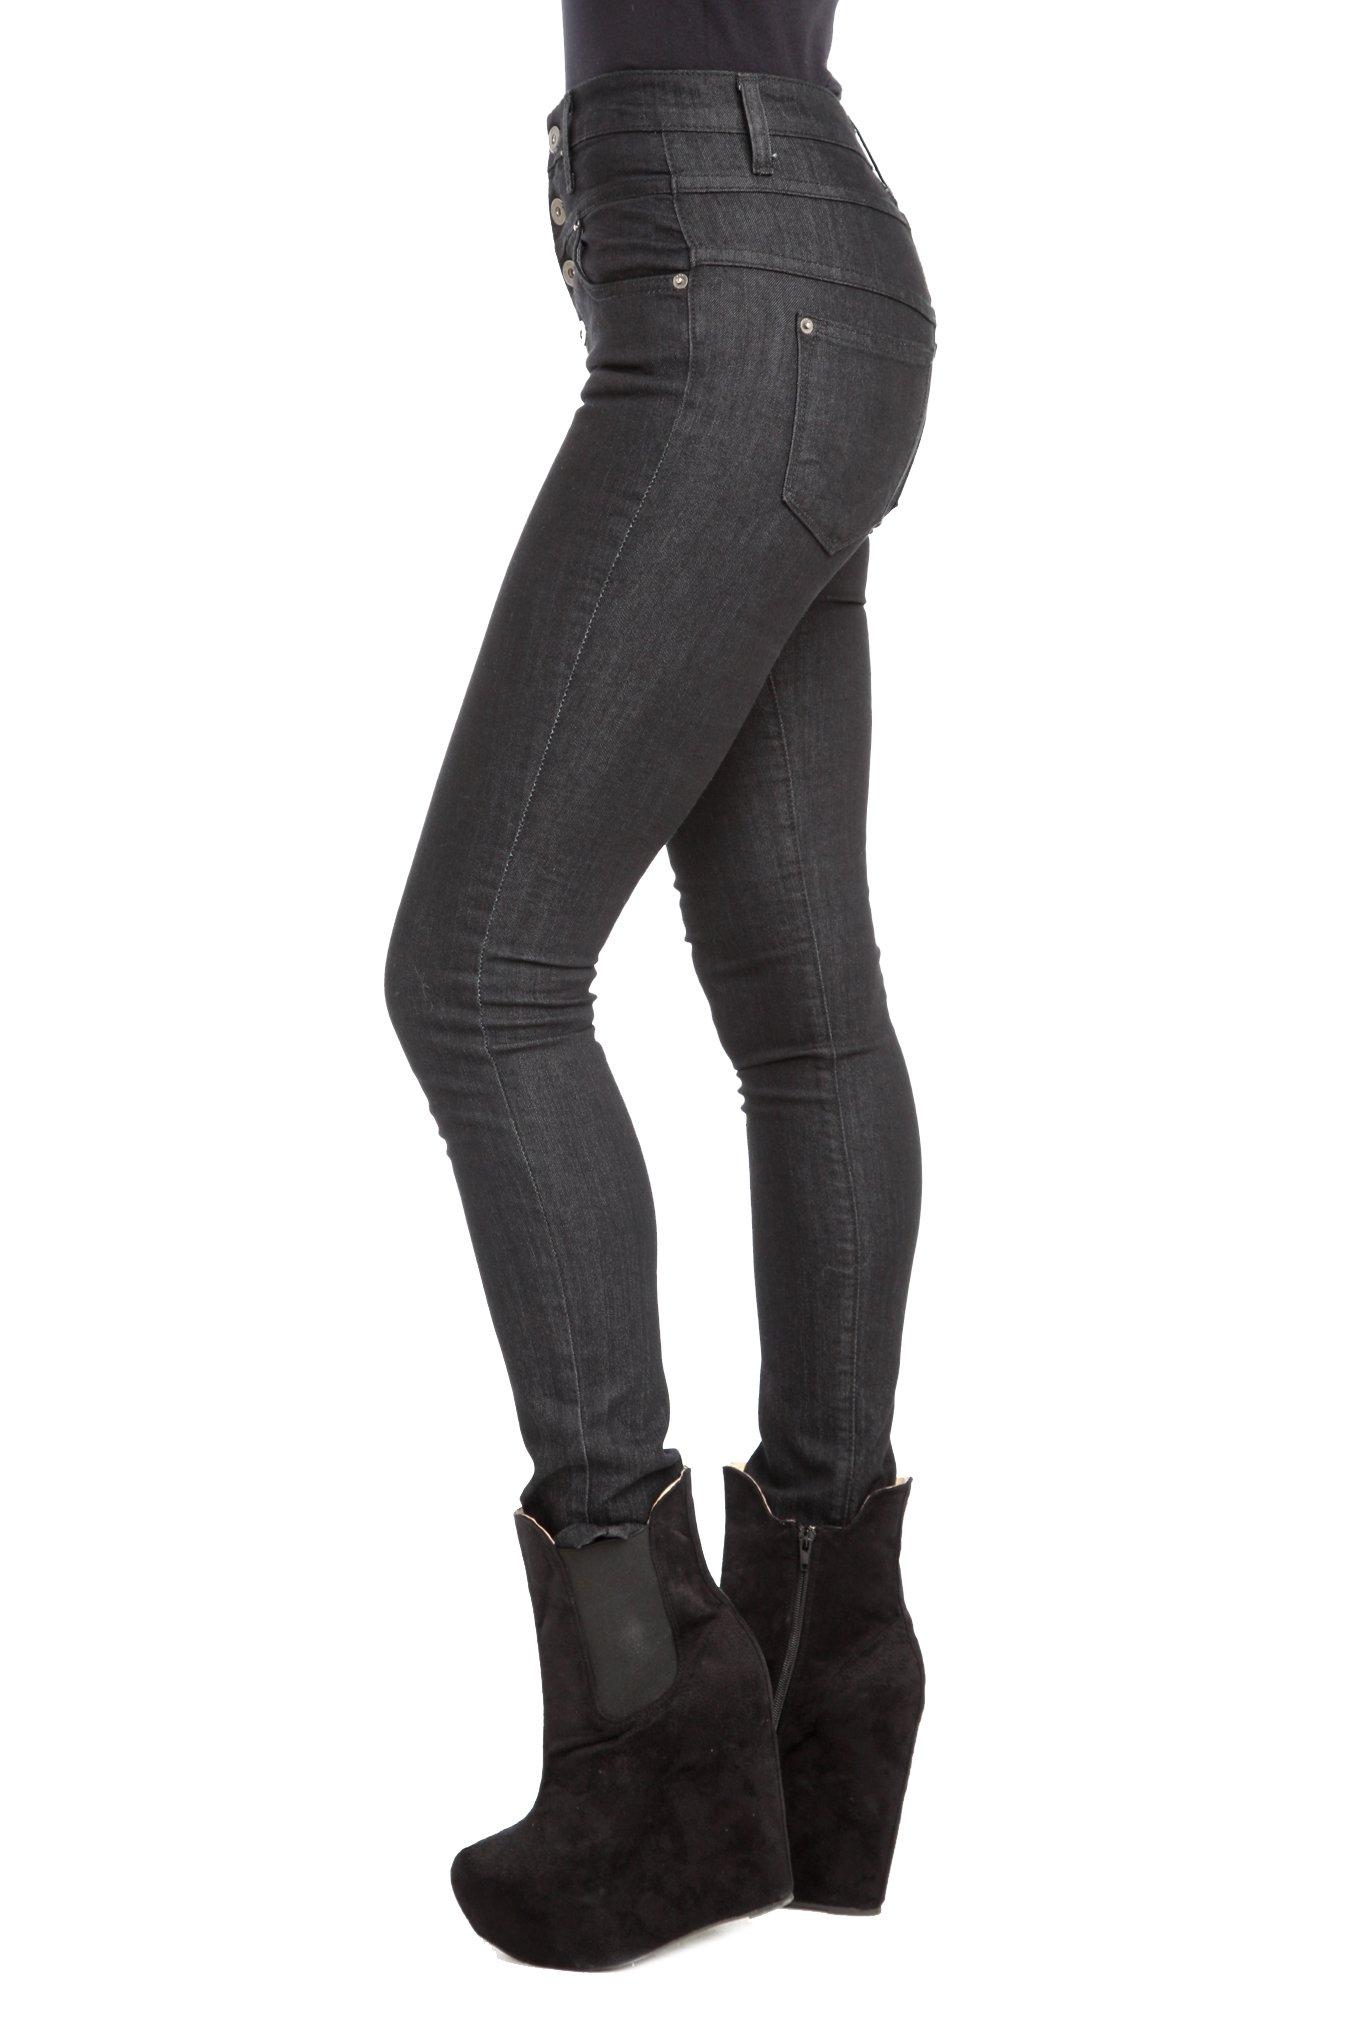 Judy Blue Black High-Waisted Skinny Jeans, , alternate